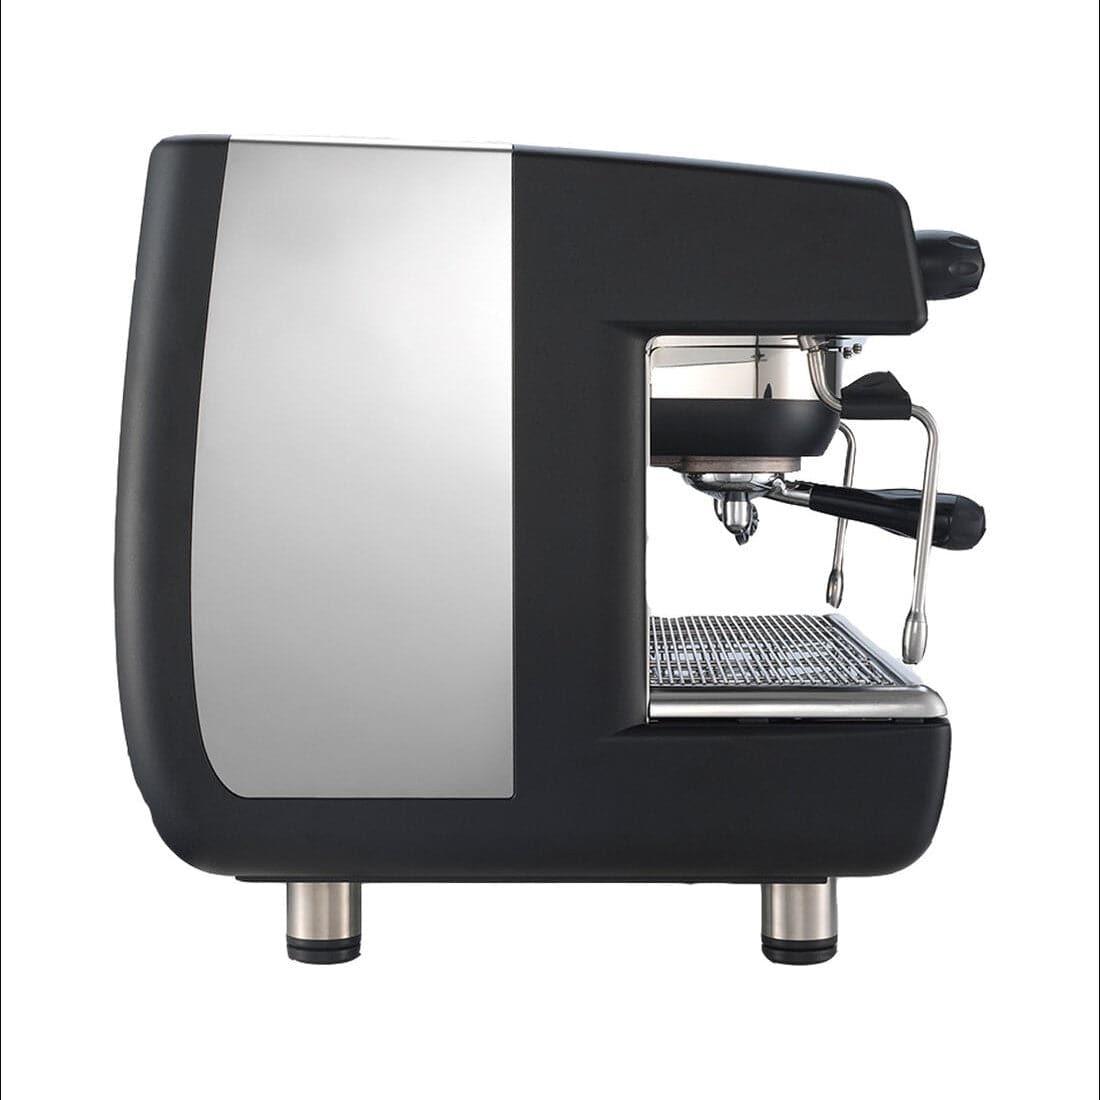 Casadio Undici A 2 Group Commercial Espresso Machine   HorecaStore